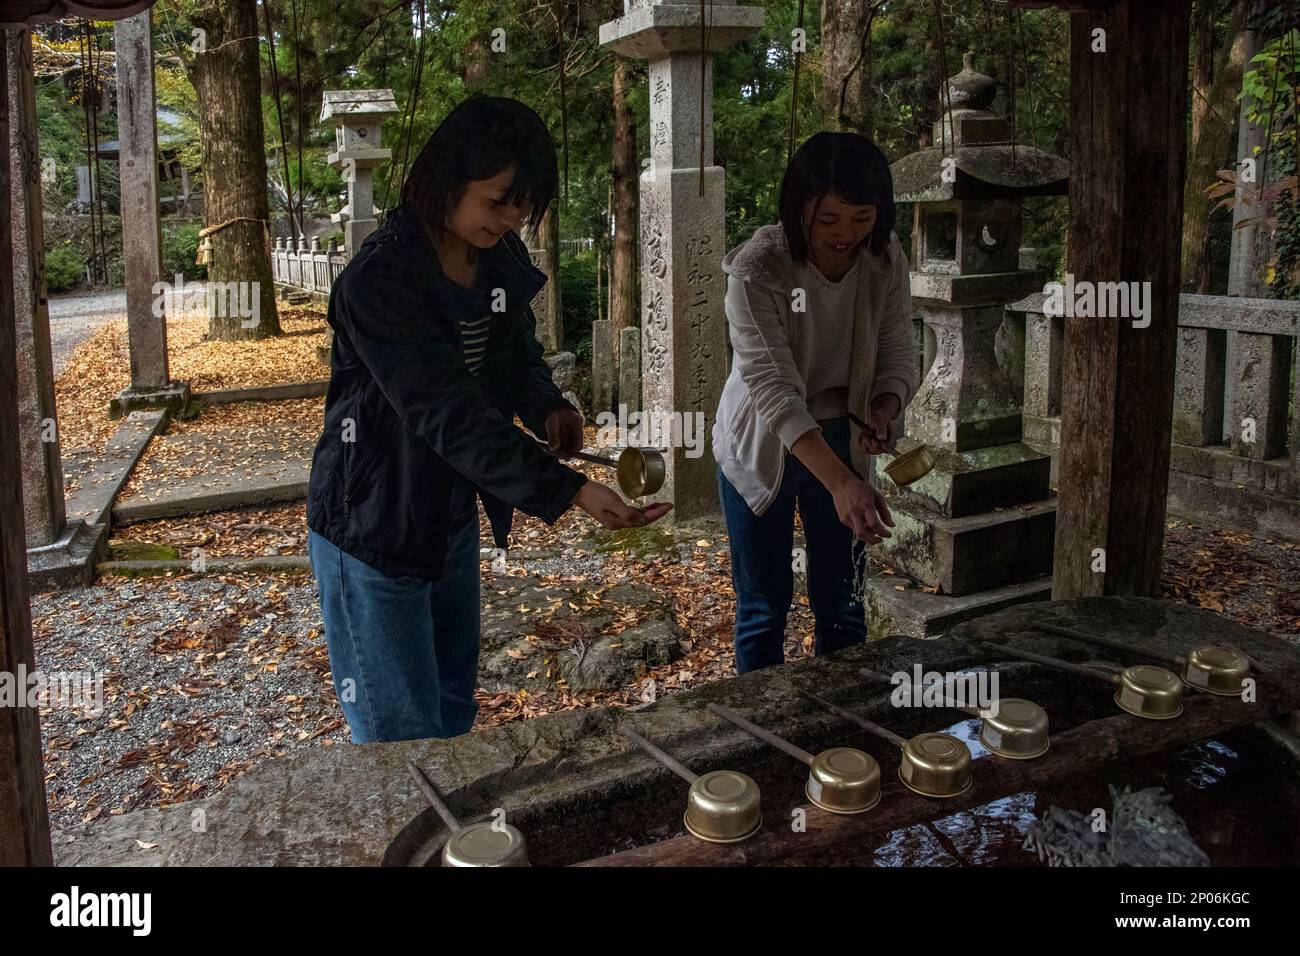 Japanese girls at temizuya ritual purification ceremony, Kamiichinomiya Oawa Shrine, Kamiyama, Shikoku Island, Japan Stock Photo